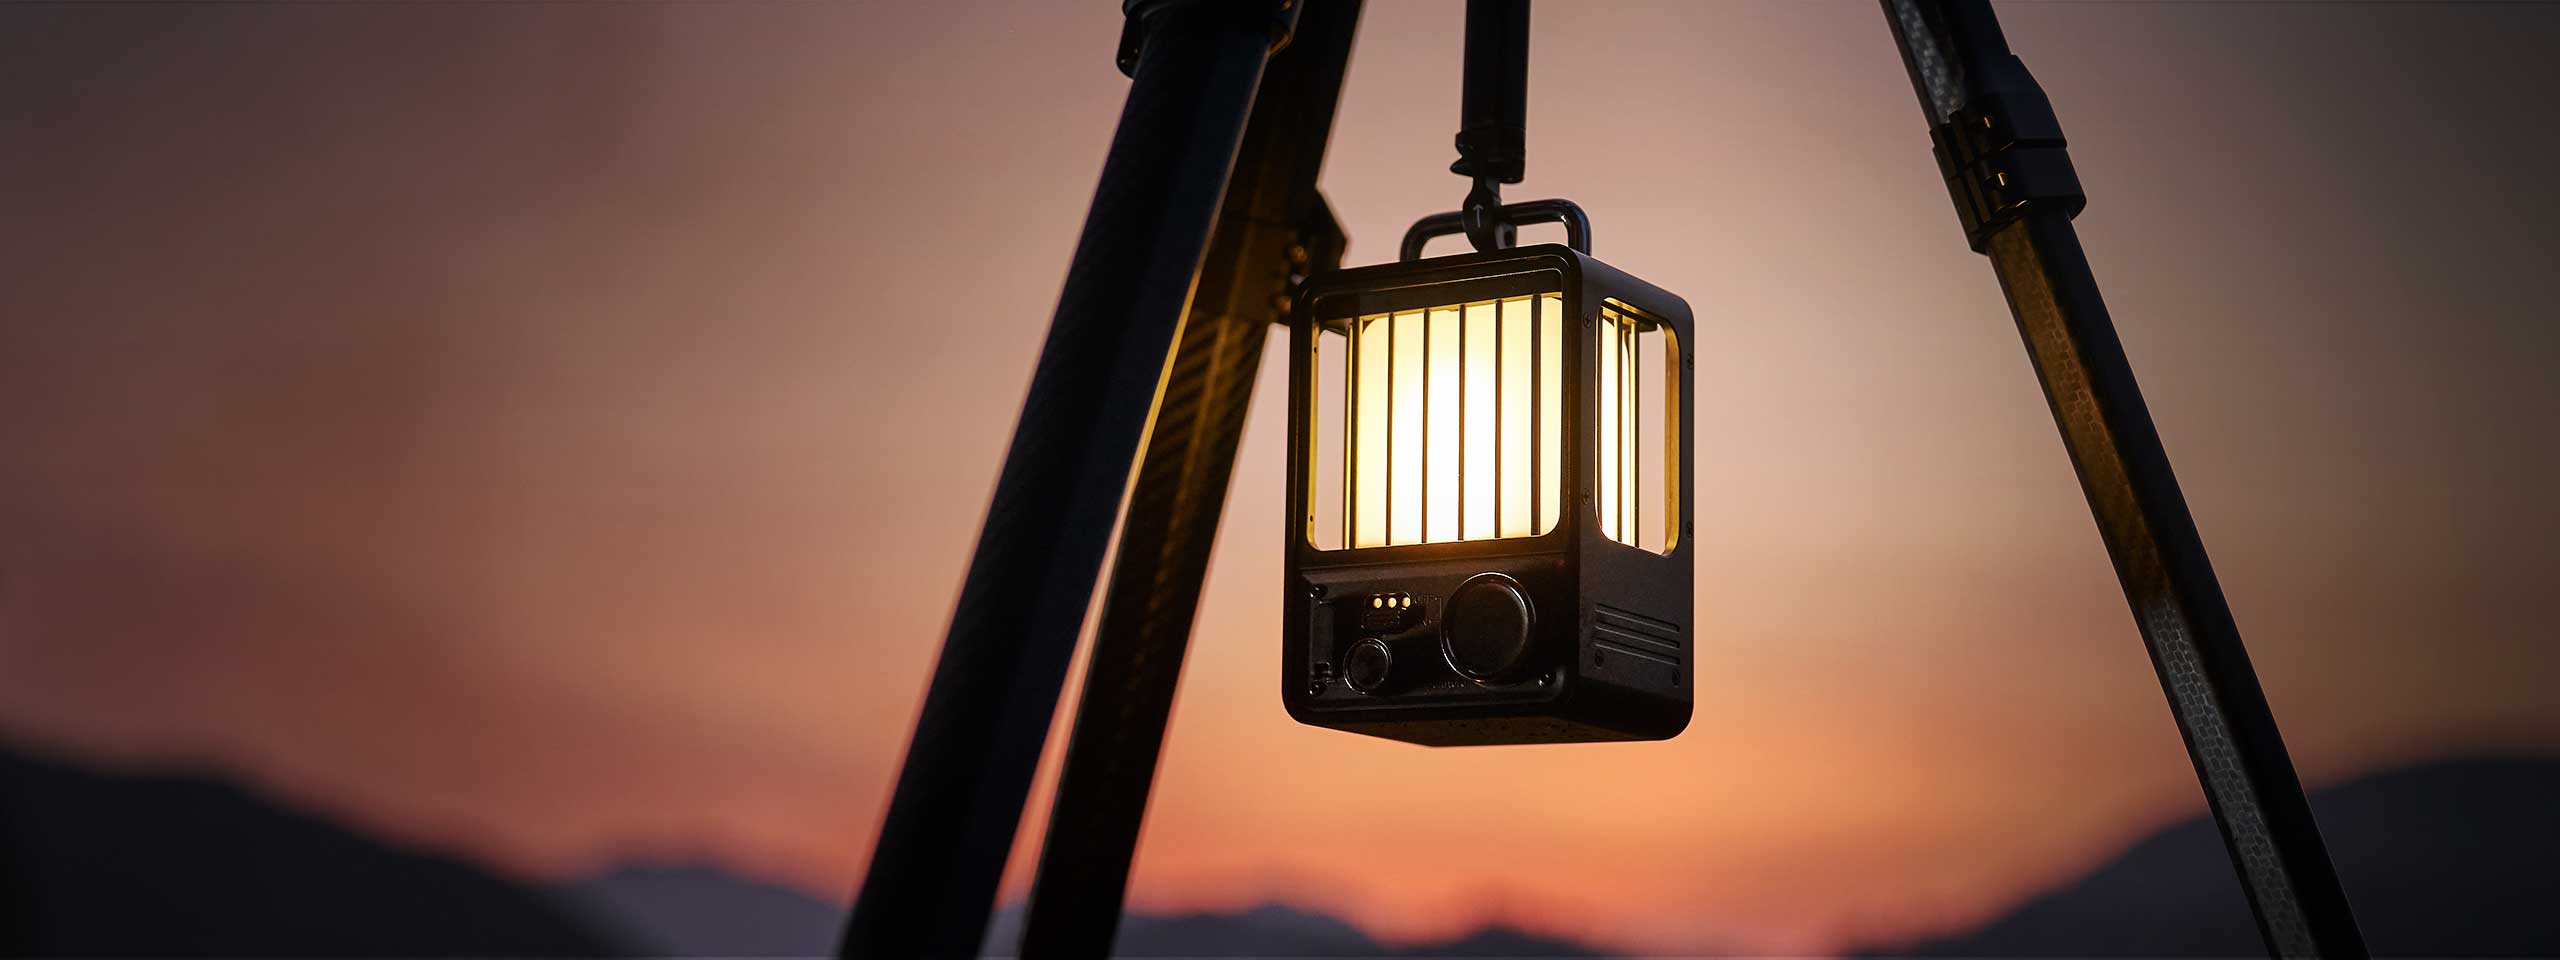 FLEXTAIL Villa Lantern-Vintage LED Rechargeable Camp Lantern